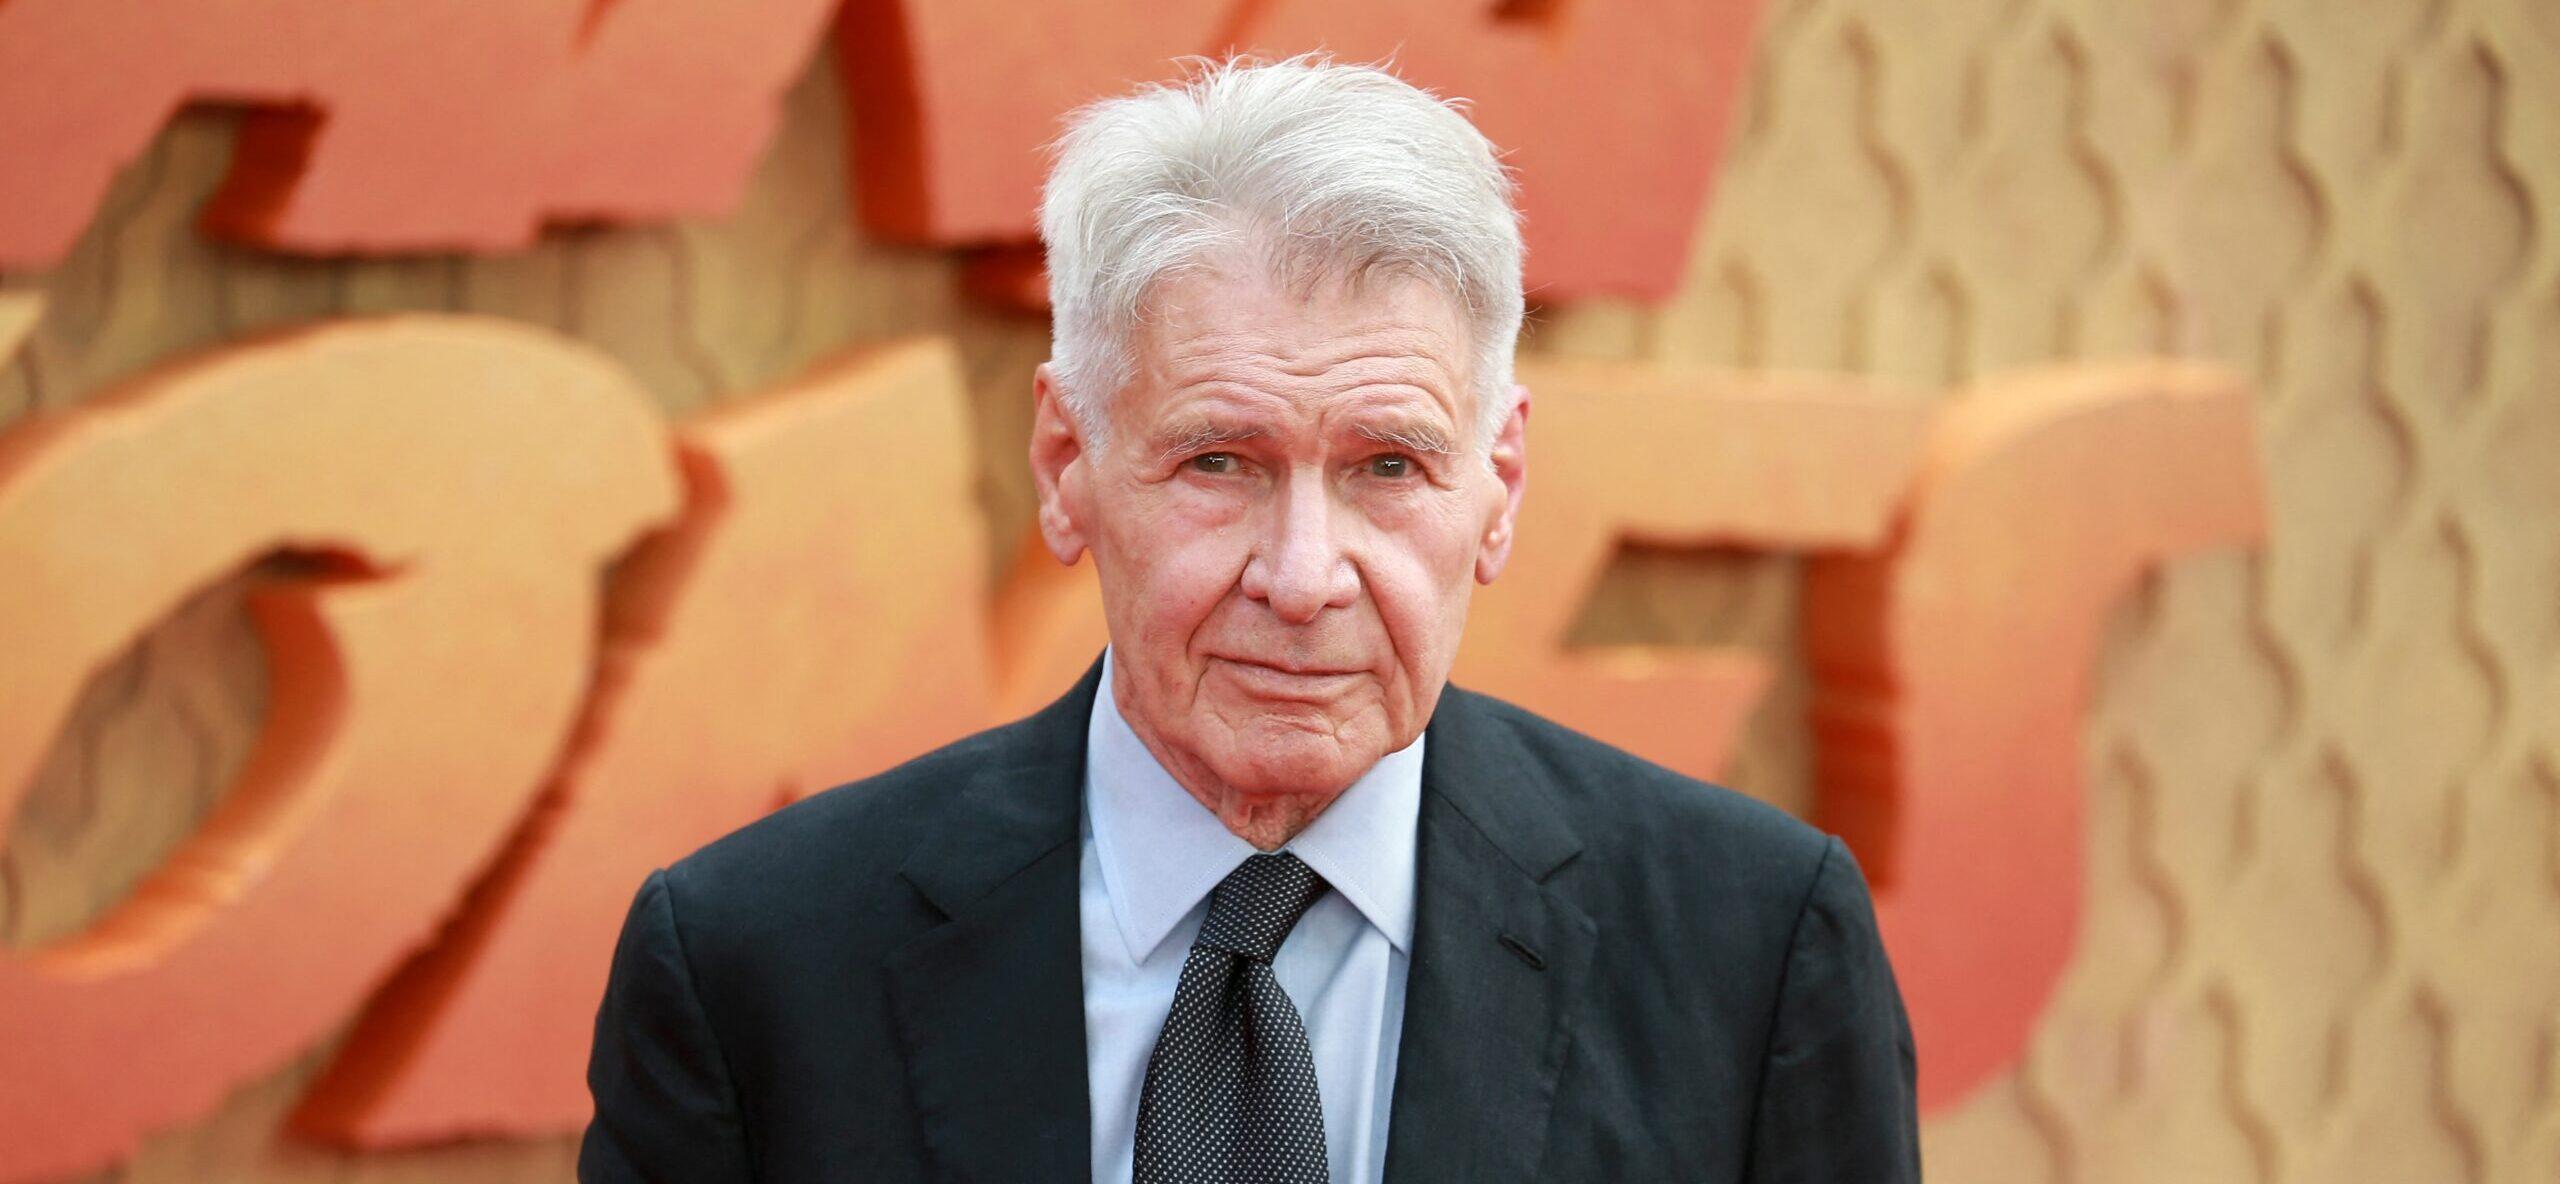 ‘Indiana Jones 5’ Tops Box Office Before July 4, Still Underperforms